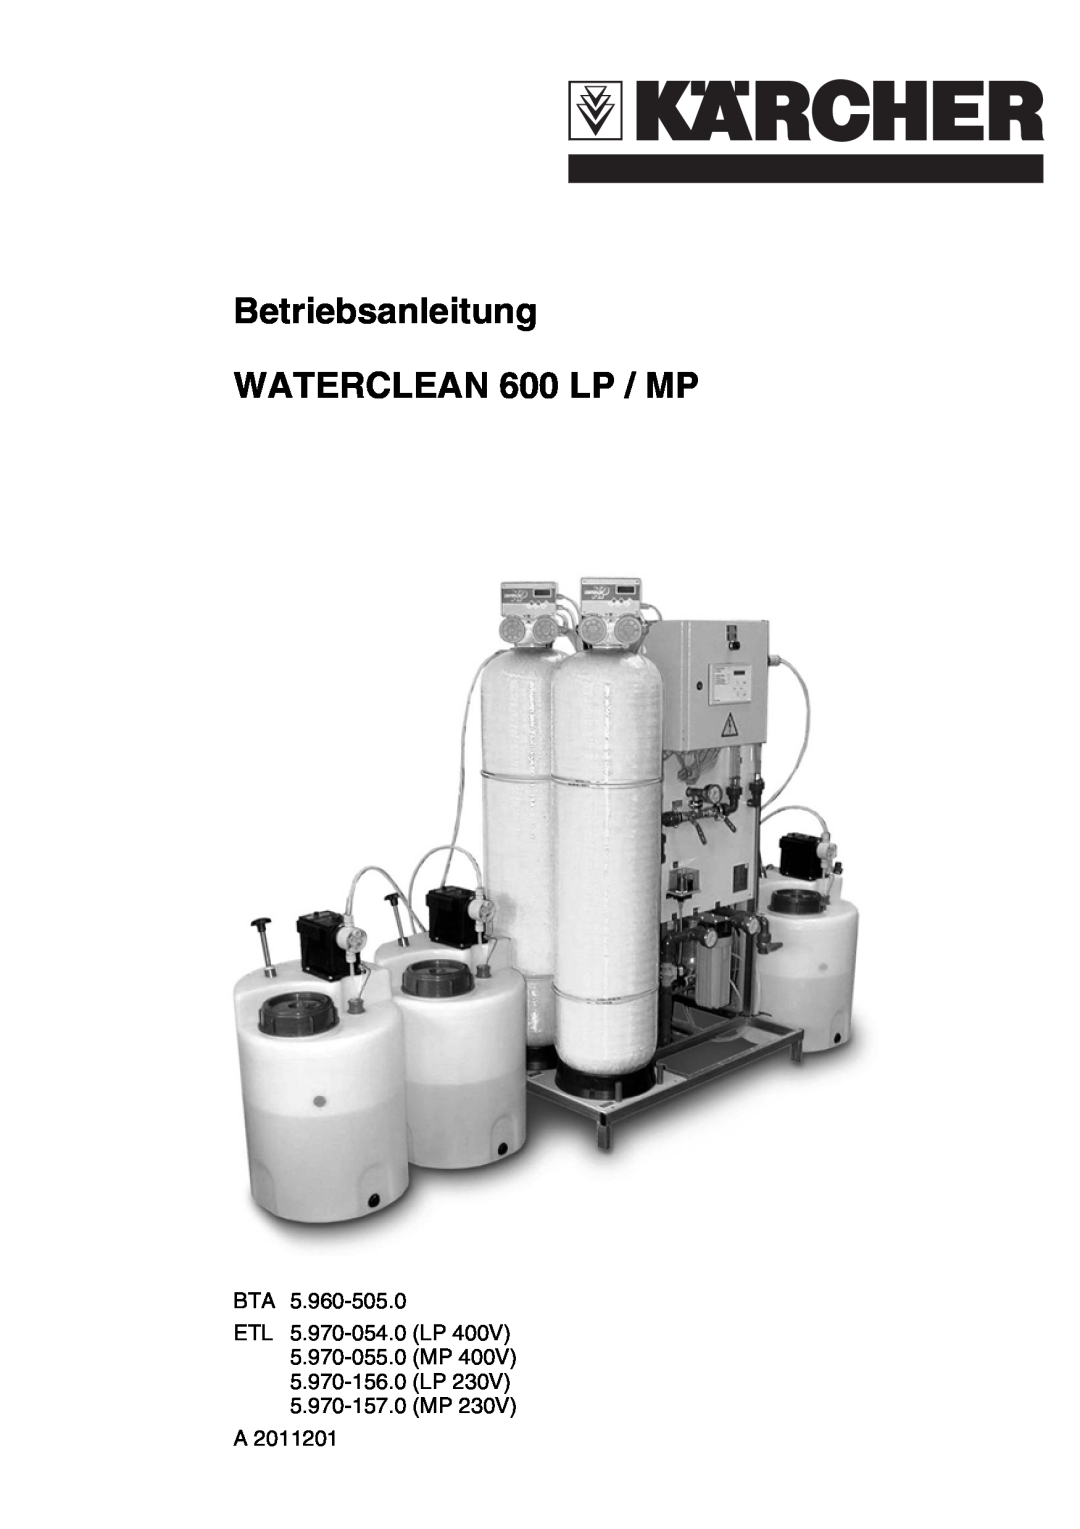 Karcher A 2011201 manual Betriebsanleitung WATERCLEAN 600 LP / MP 